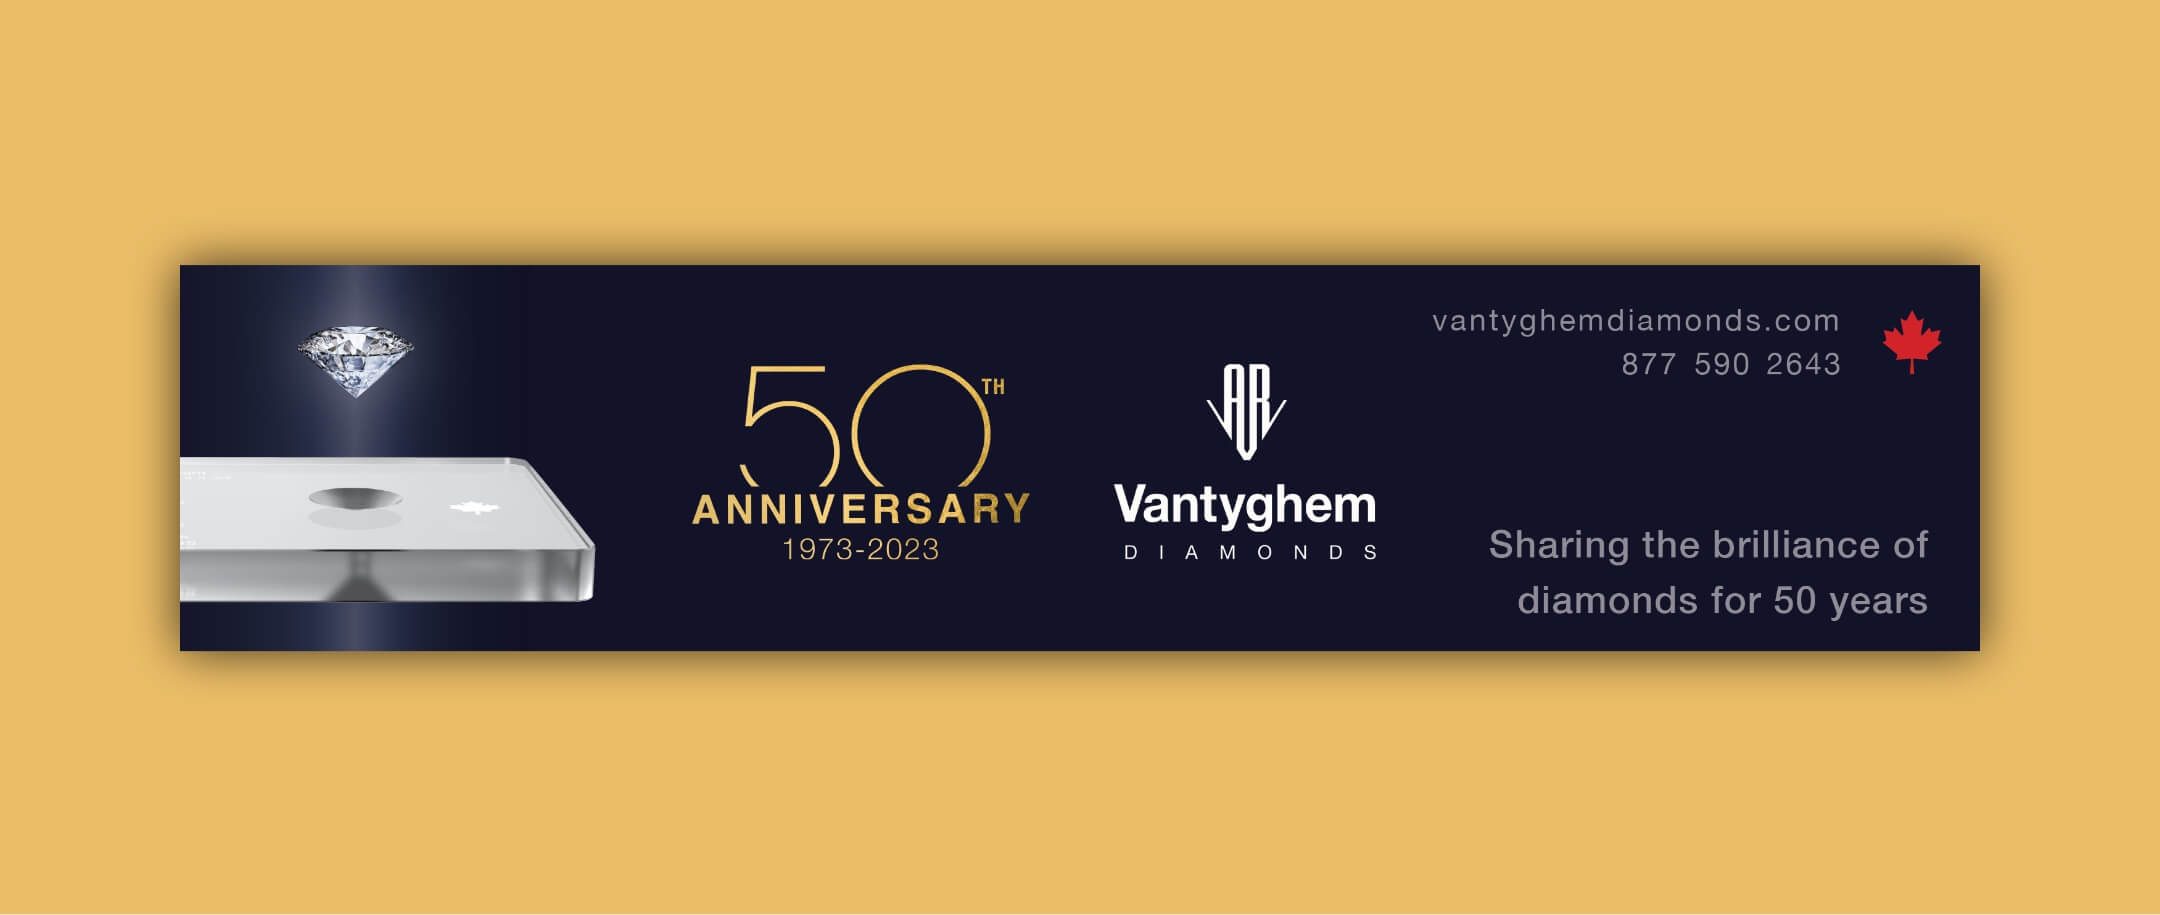 Vantyghem anniversary digital banner ad